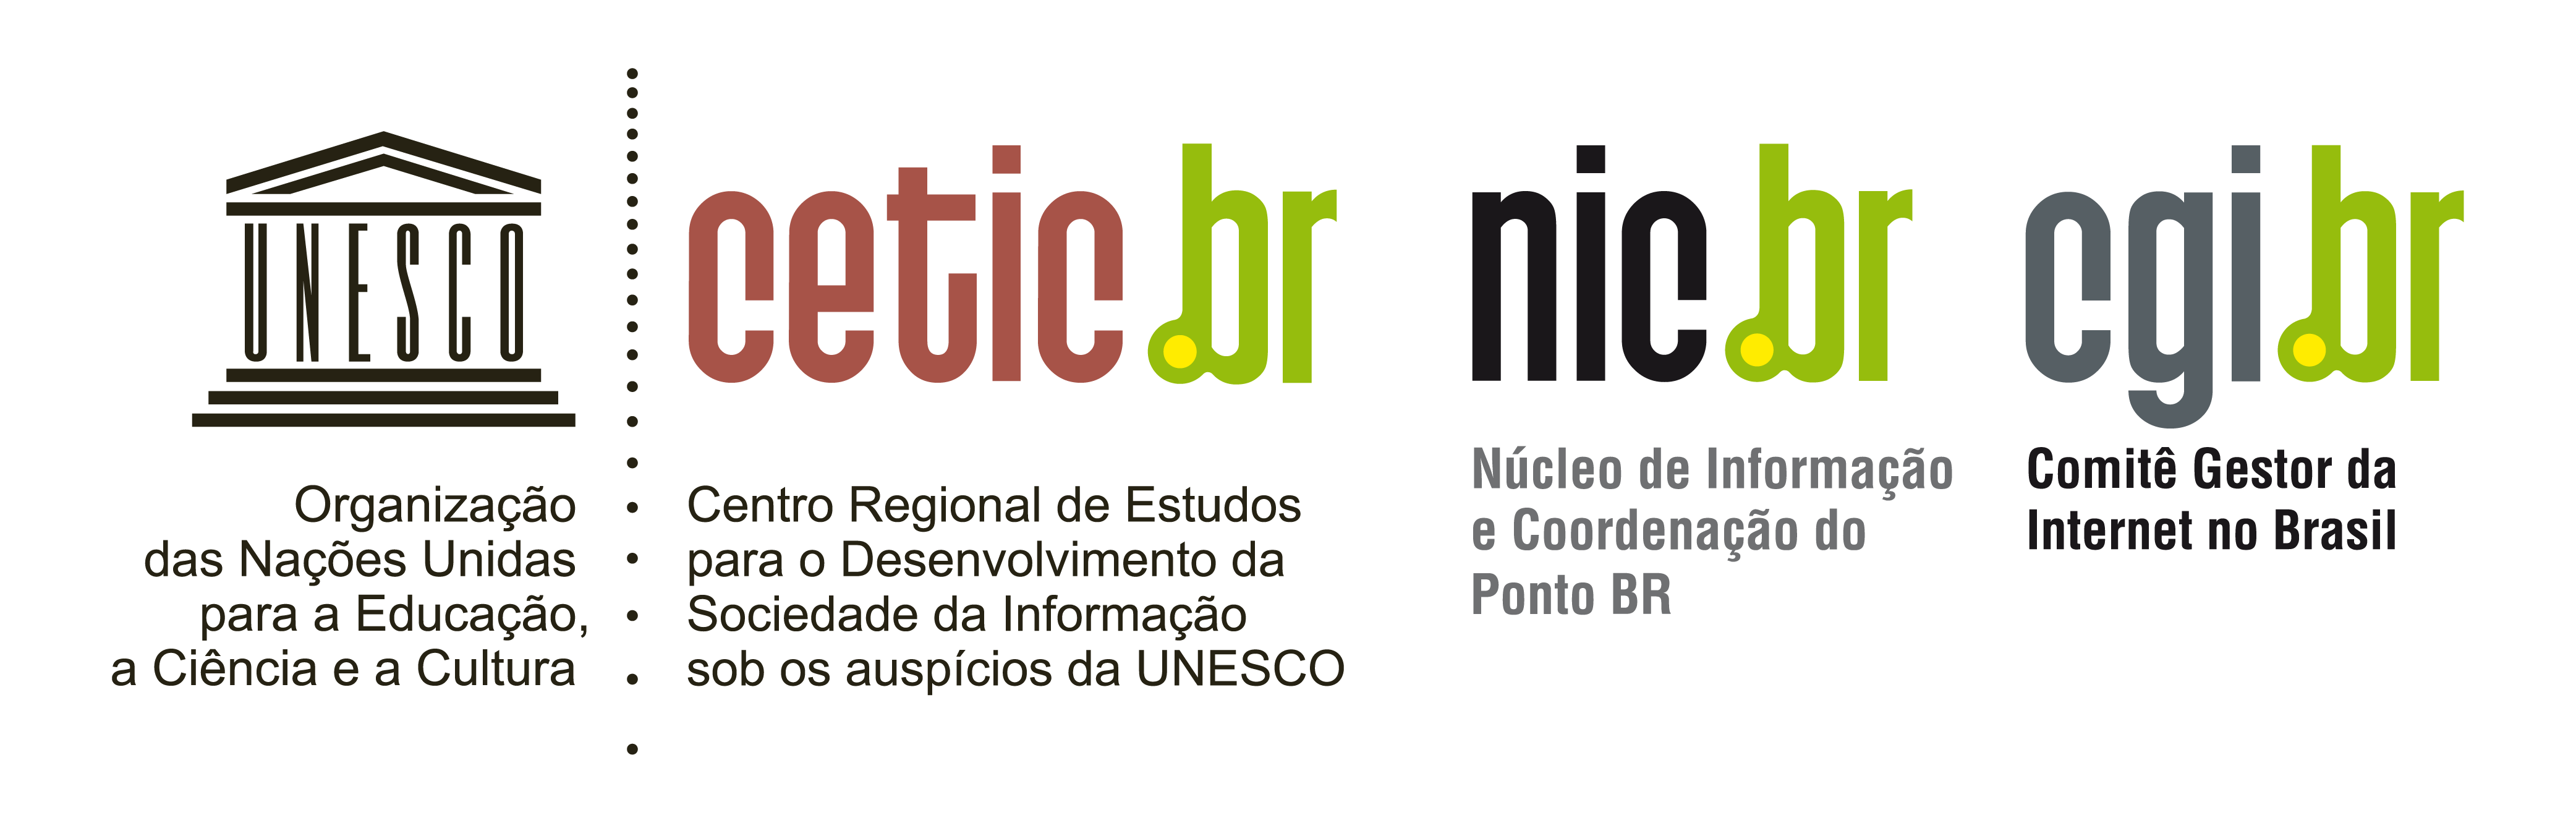 Logo Cetic, CGI.BR e NIC.BR